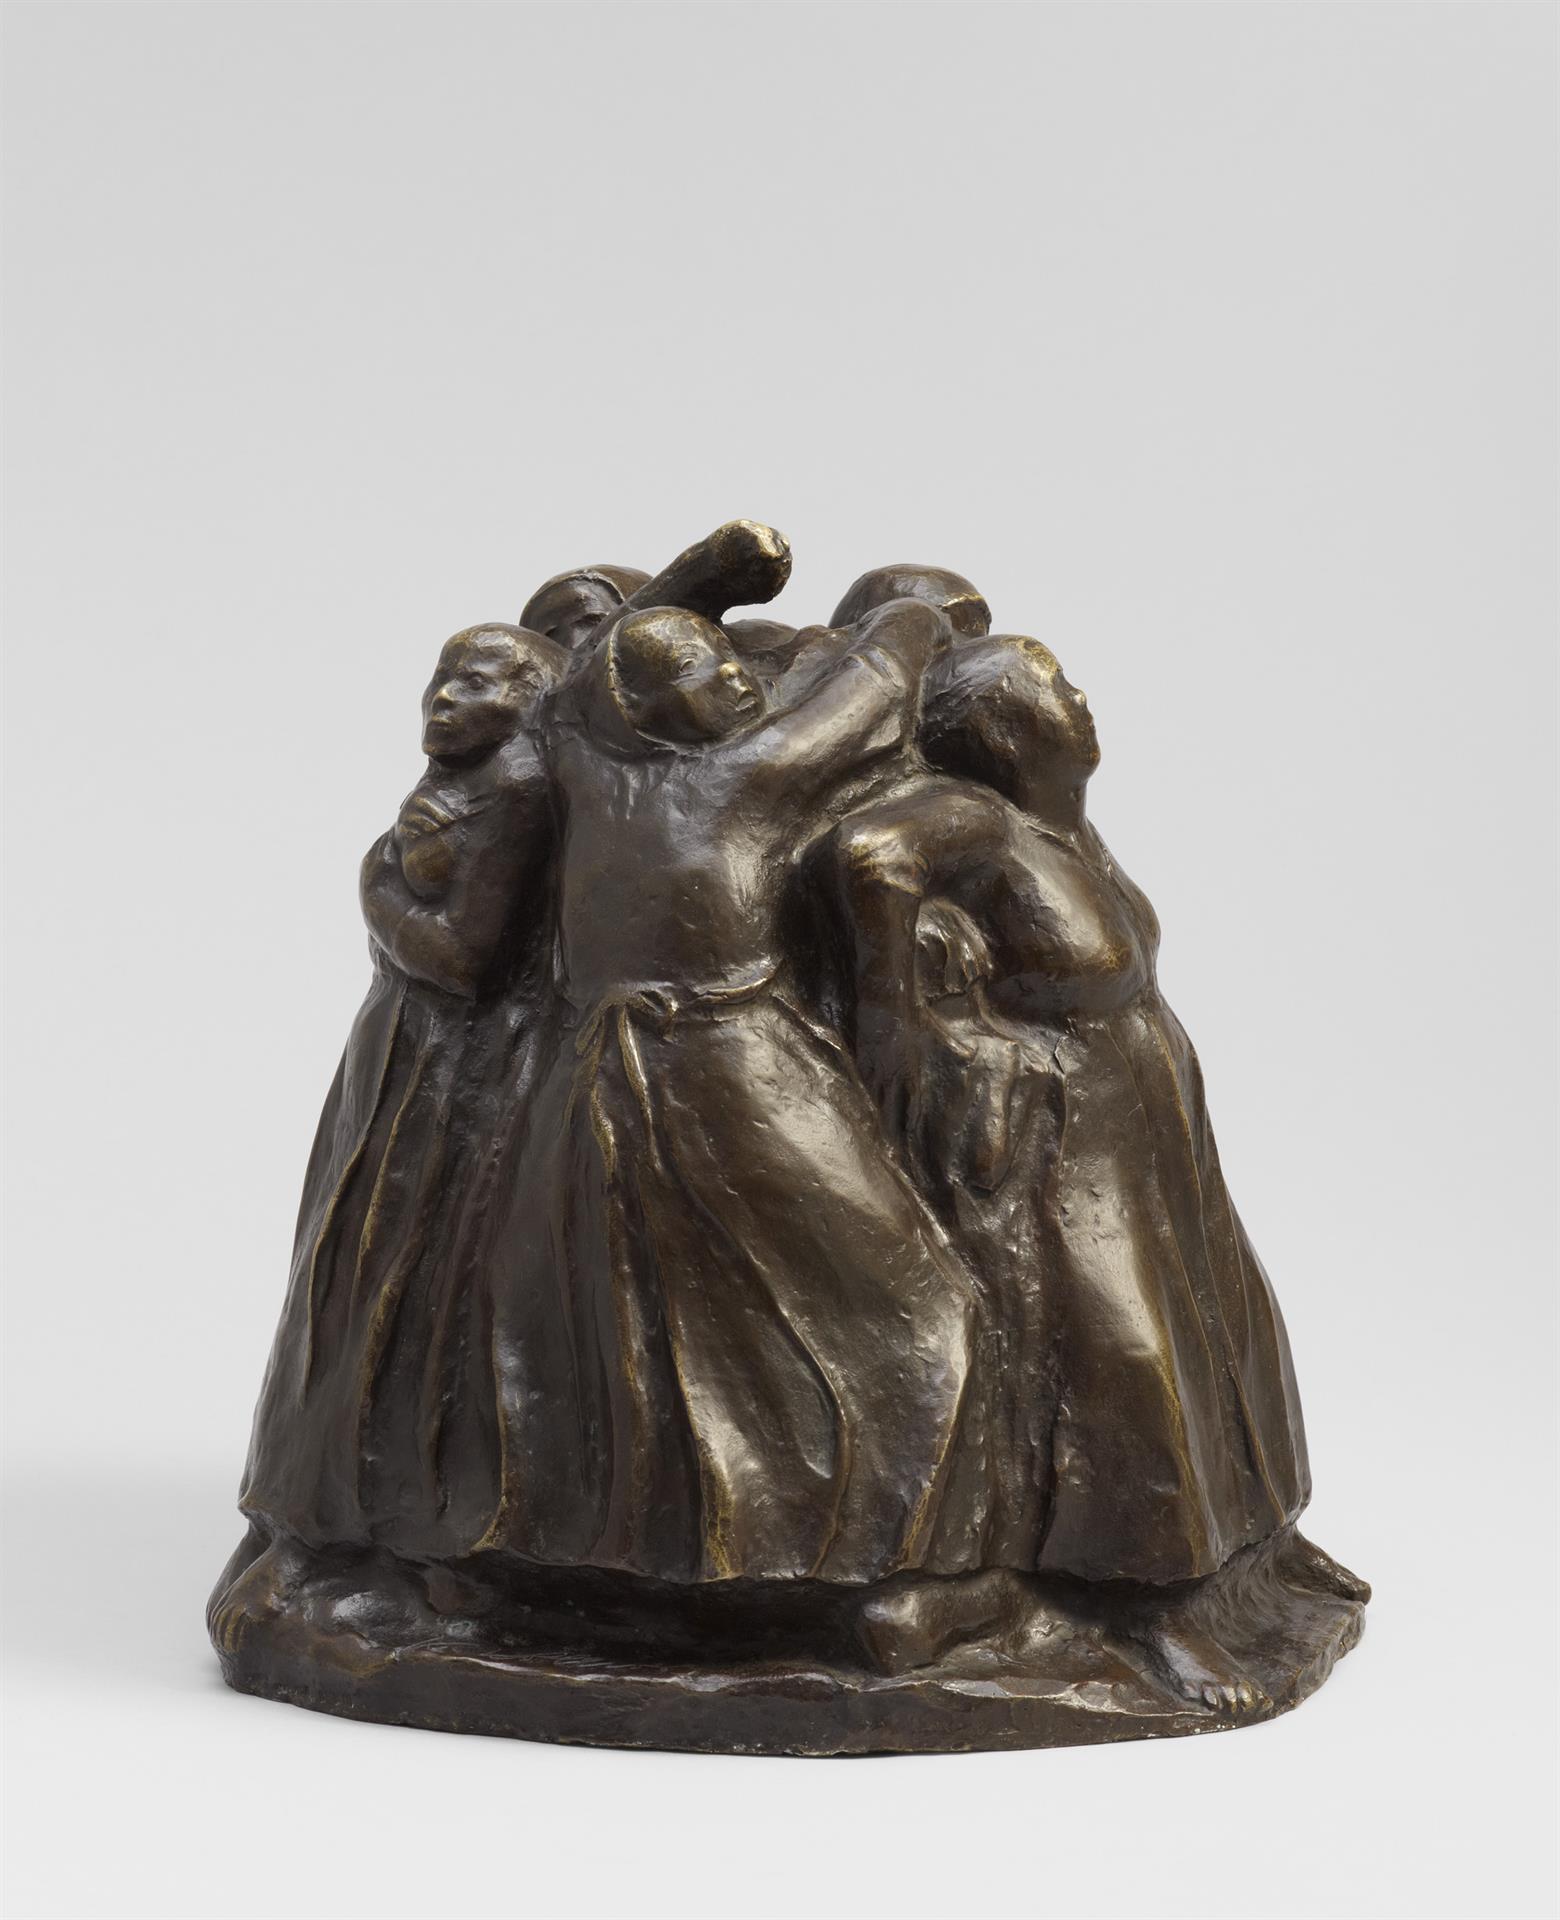 Käthe Kollwitz, La Tour des mères, 1937/38, bronze, Seeler 35 II.B.1, Collection Kollwitz de Cologne © Käthe Kollwitz Museum Köln